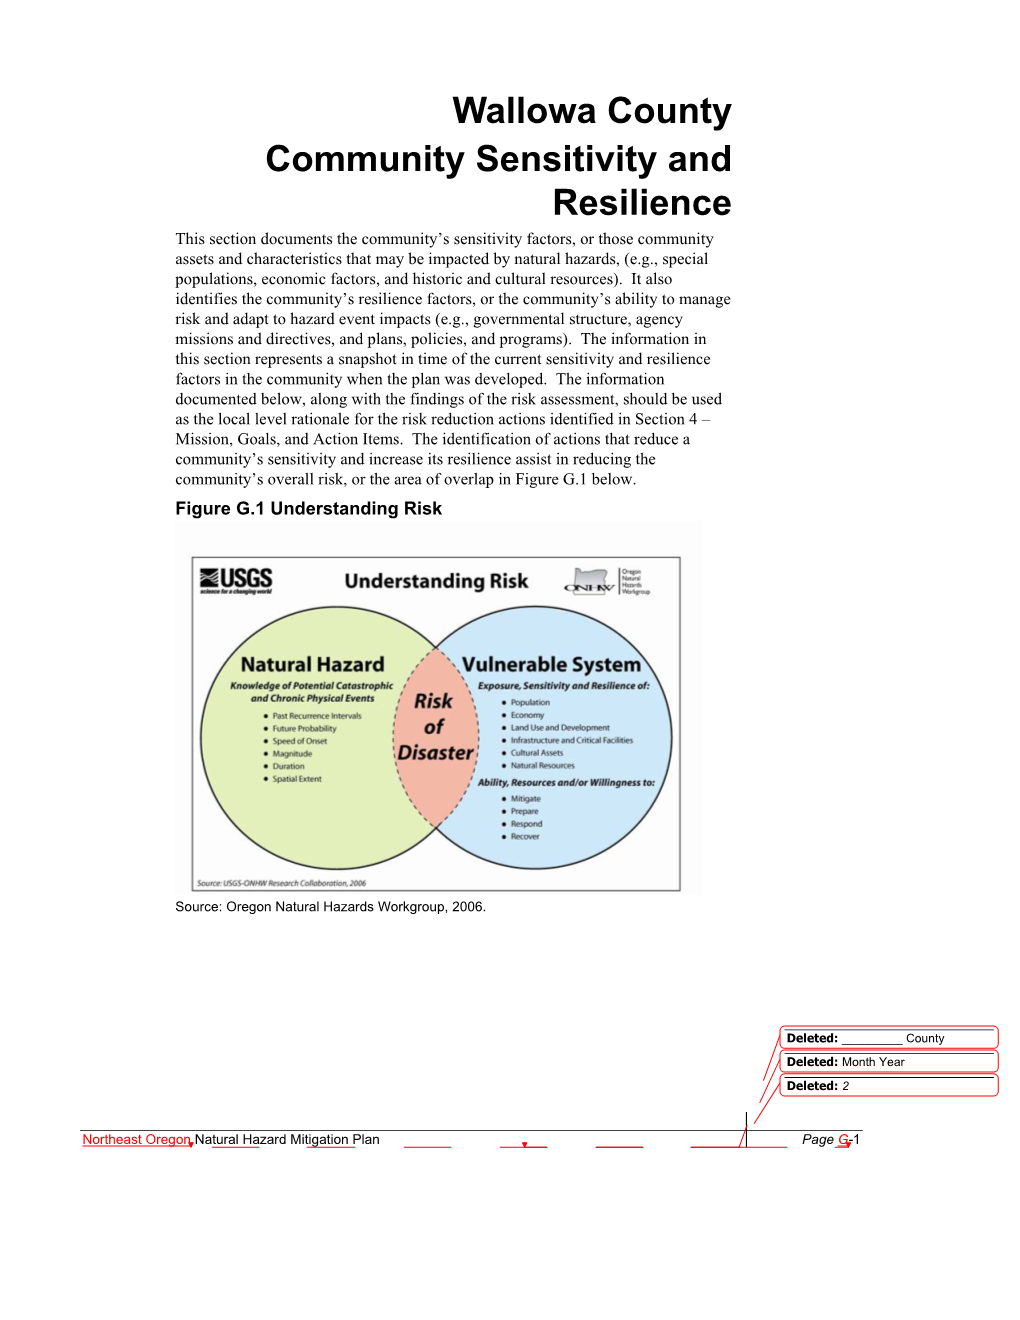 Wallowa County Community Sensitivity and Resilience